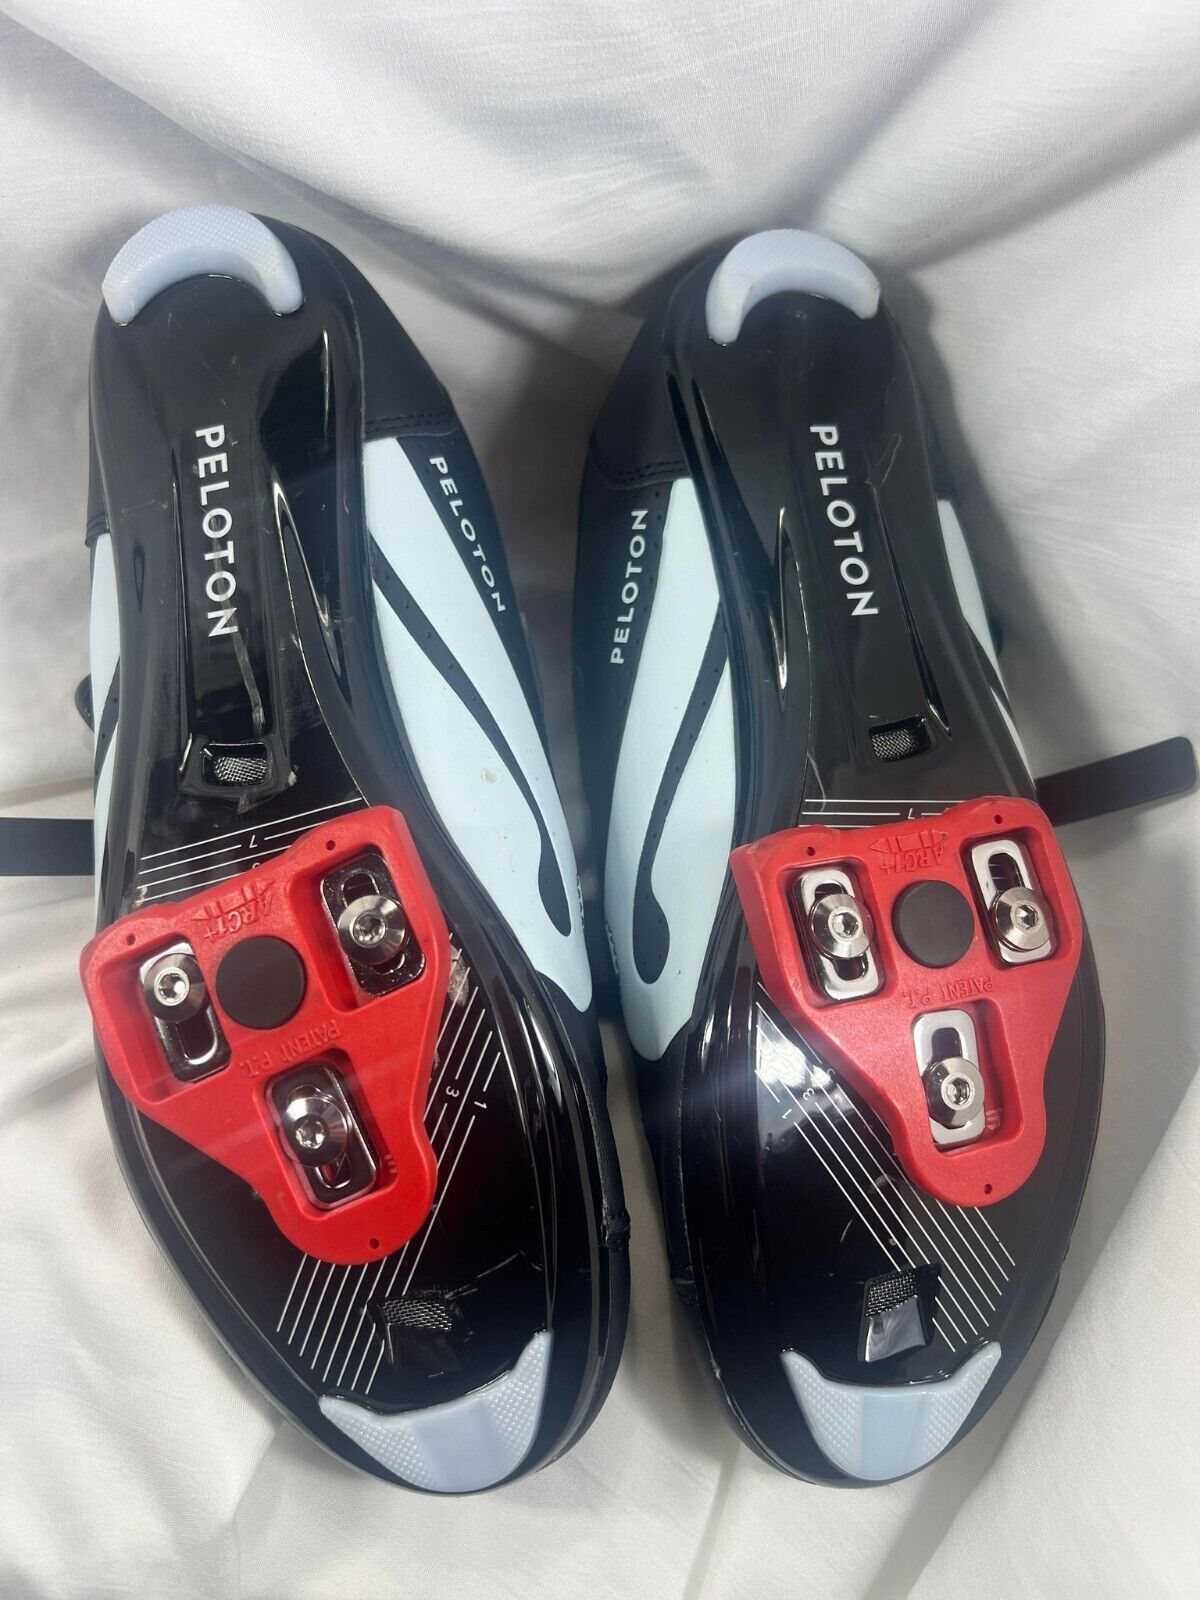 Peloton Cycling Shoes PL-SH-02-40 Black/Red - US Men's 8 / Women's 10/ EU 41